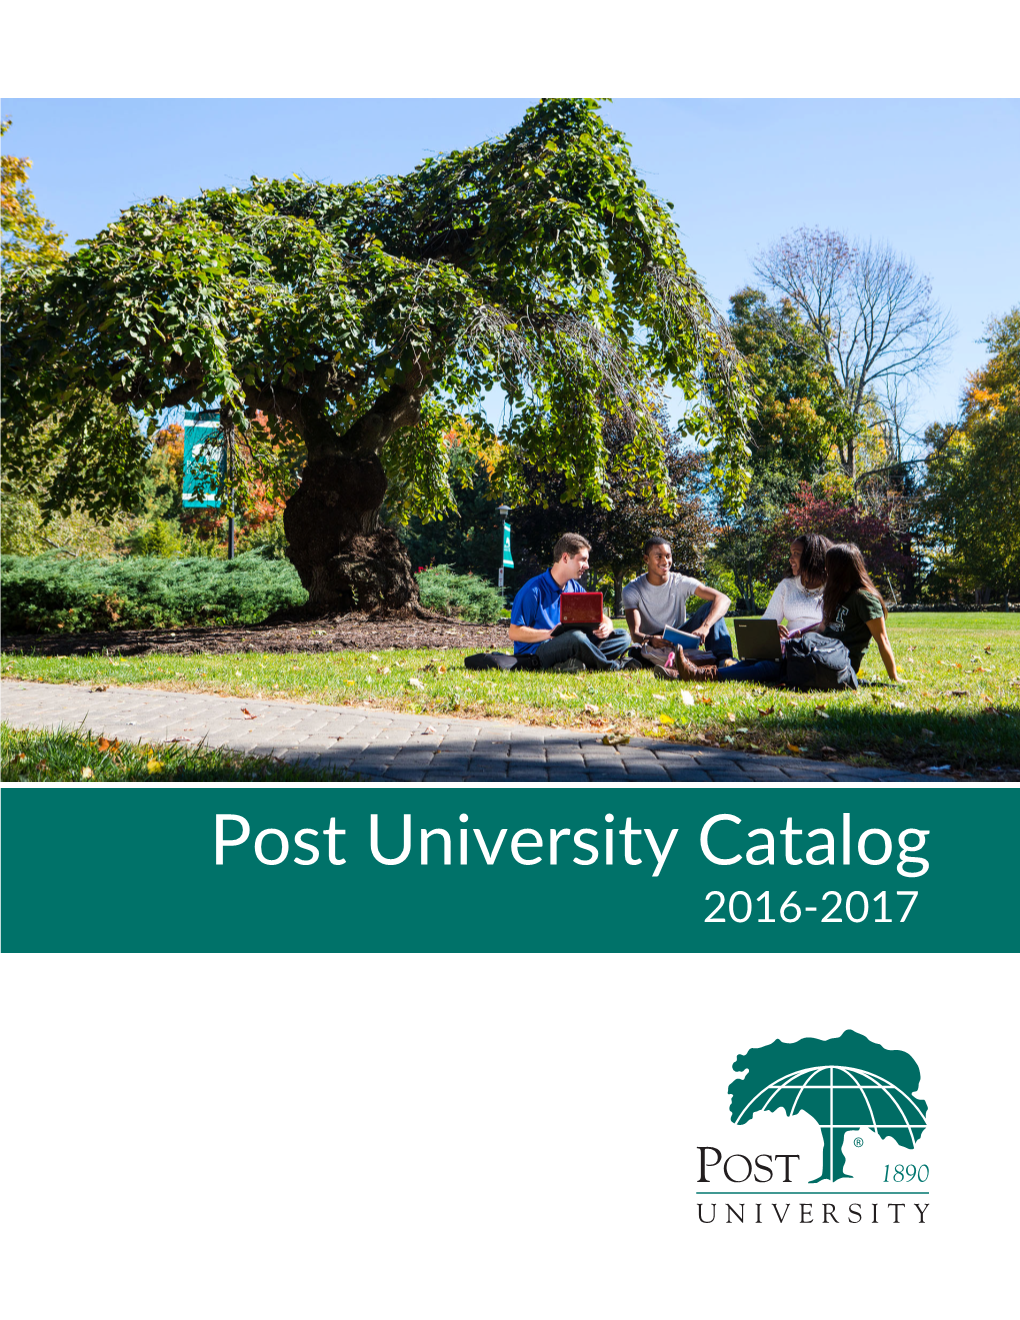 Post University Catalog 2016-2017